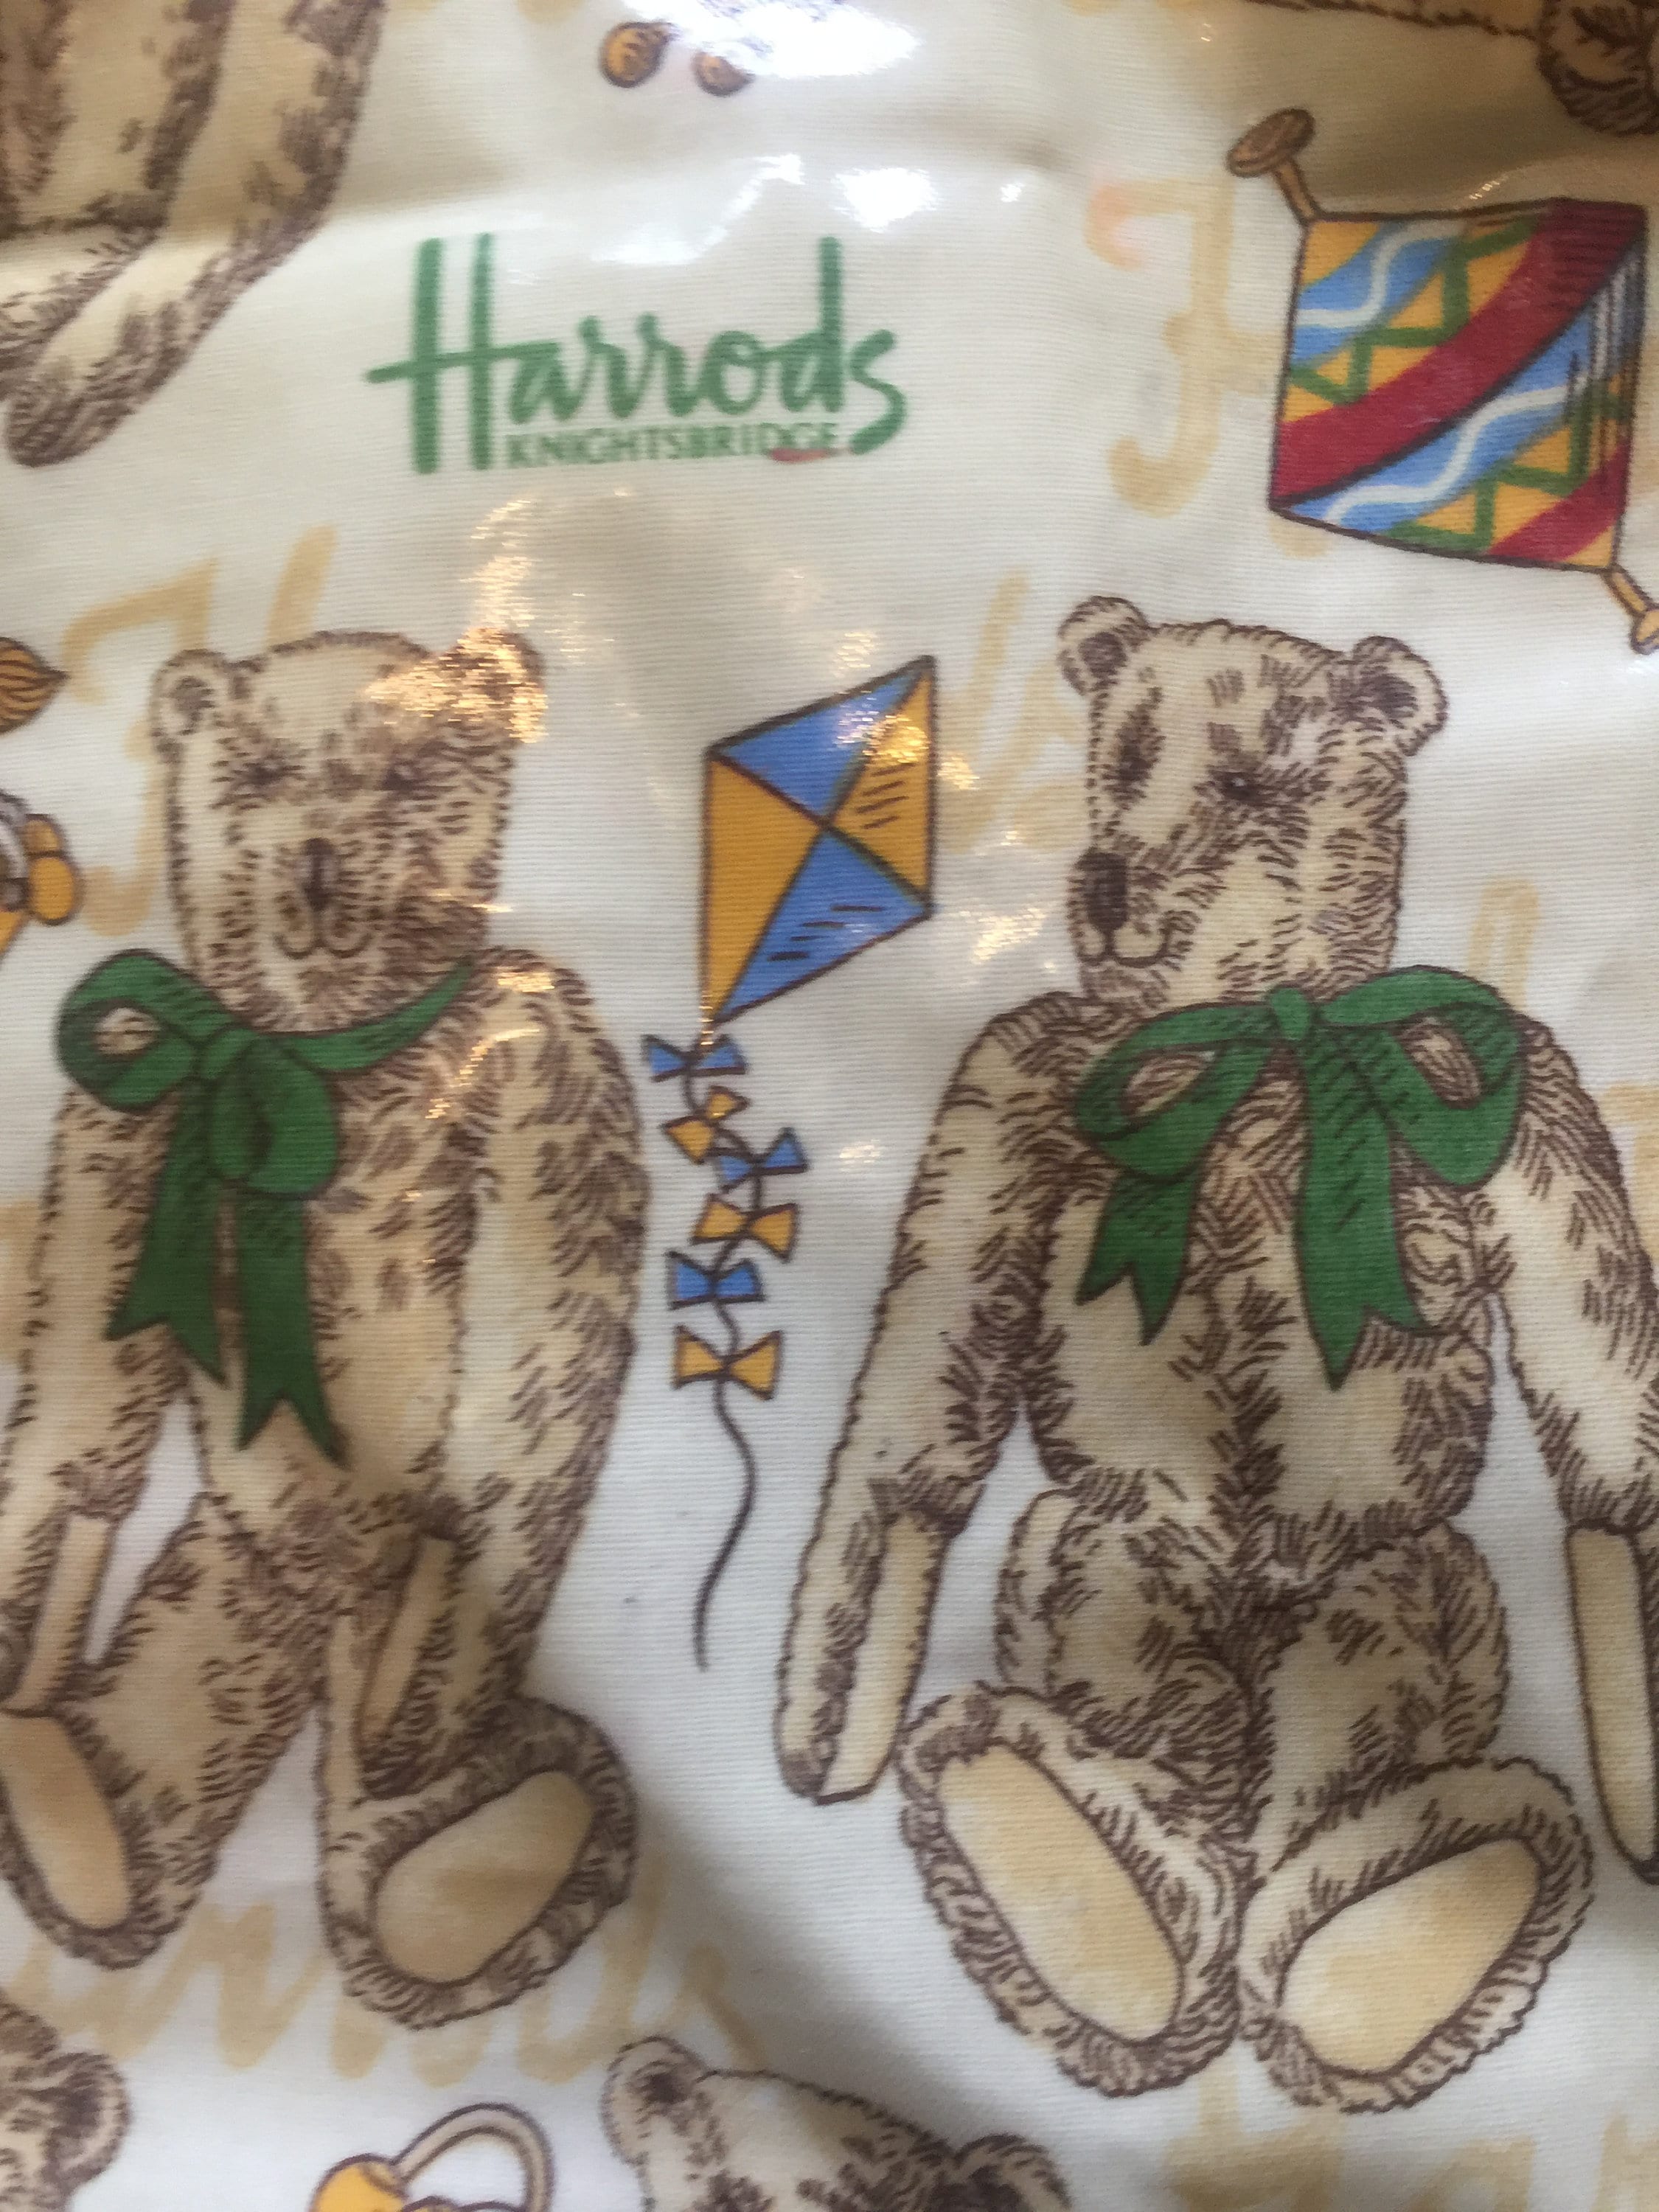 Harrods harrods vintage mouse bears,doorman and golfer 